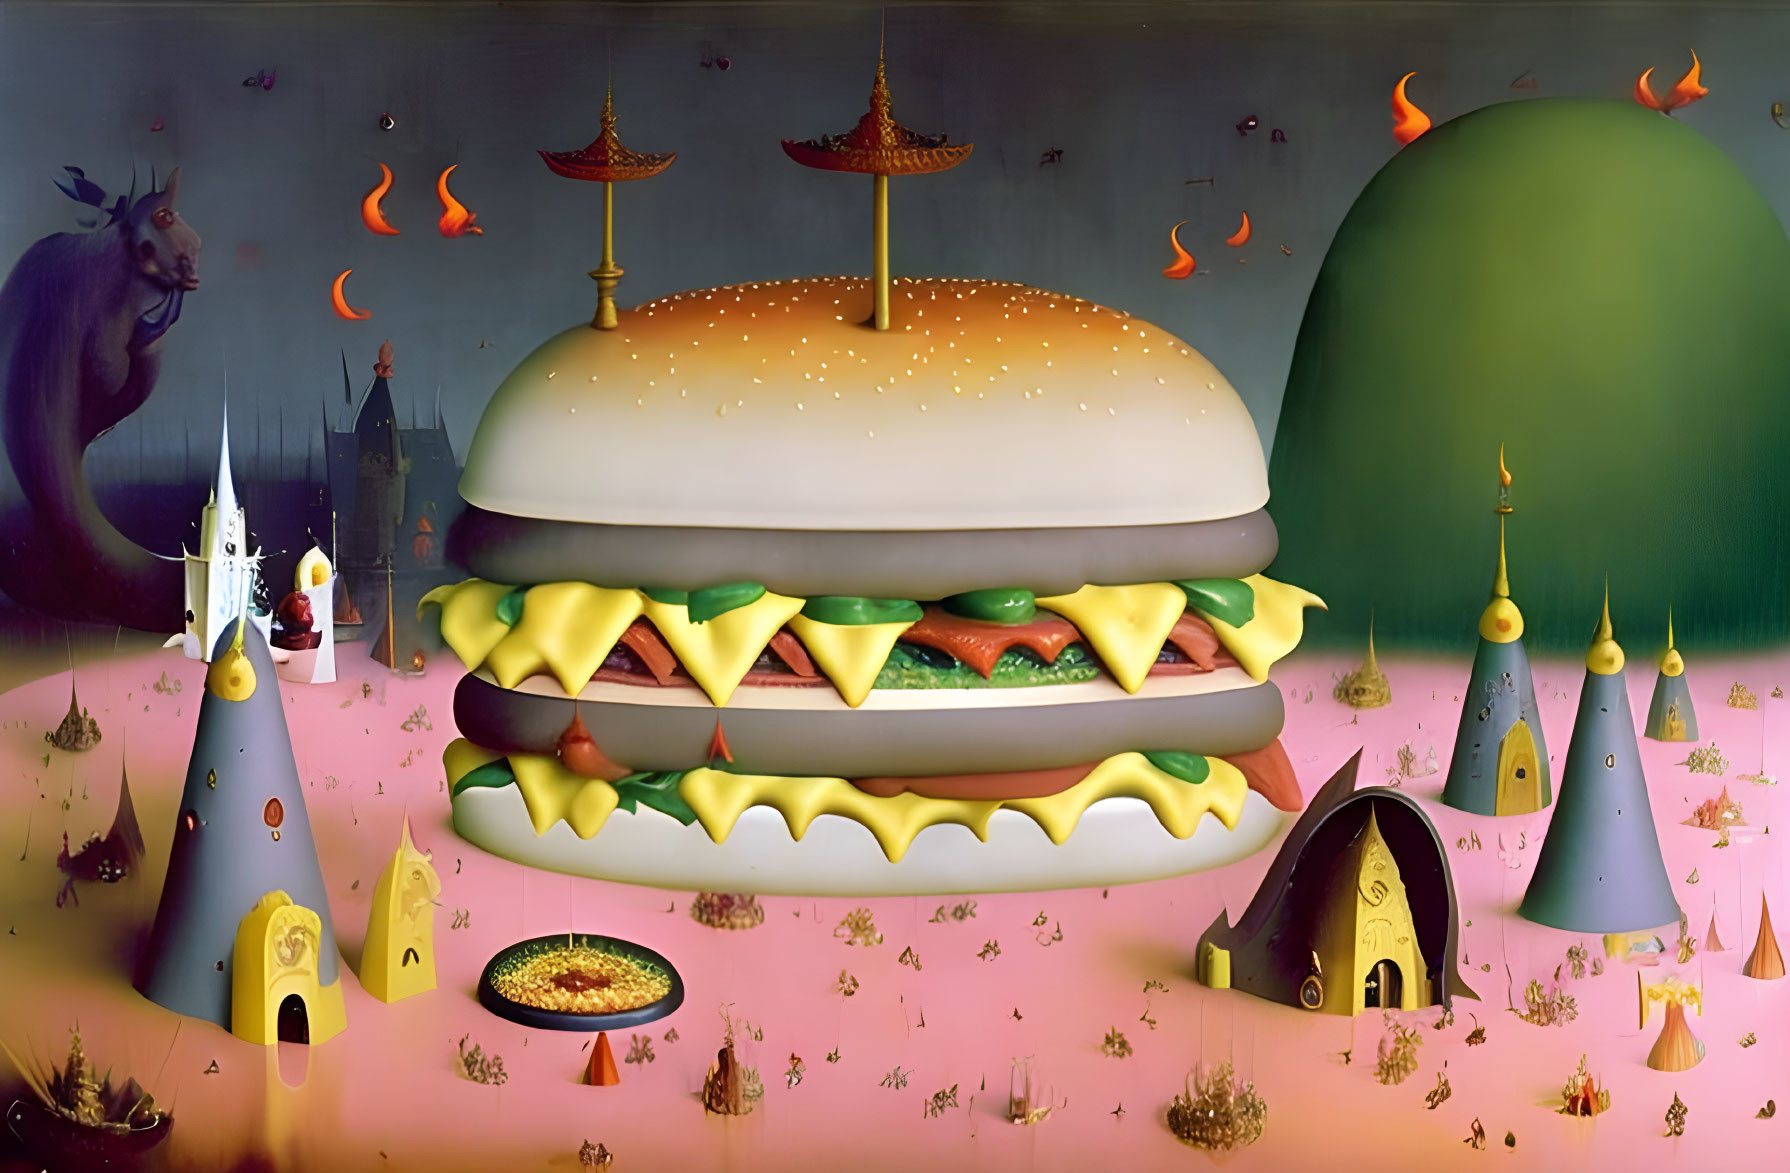 Cheeseburger in purgatory 